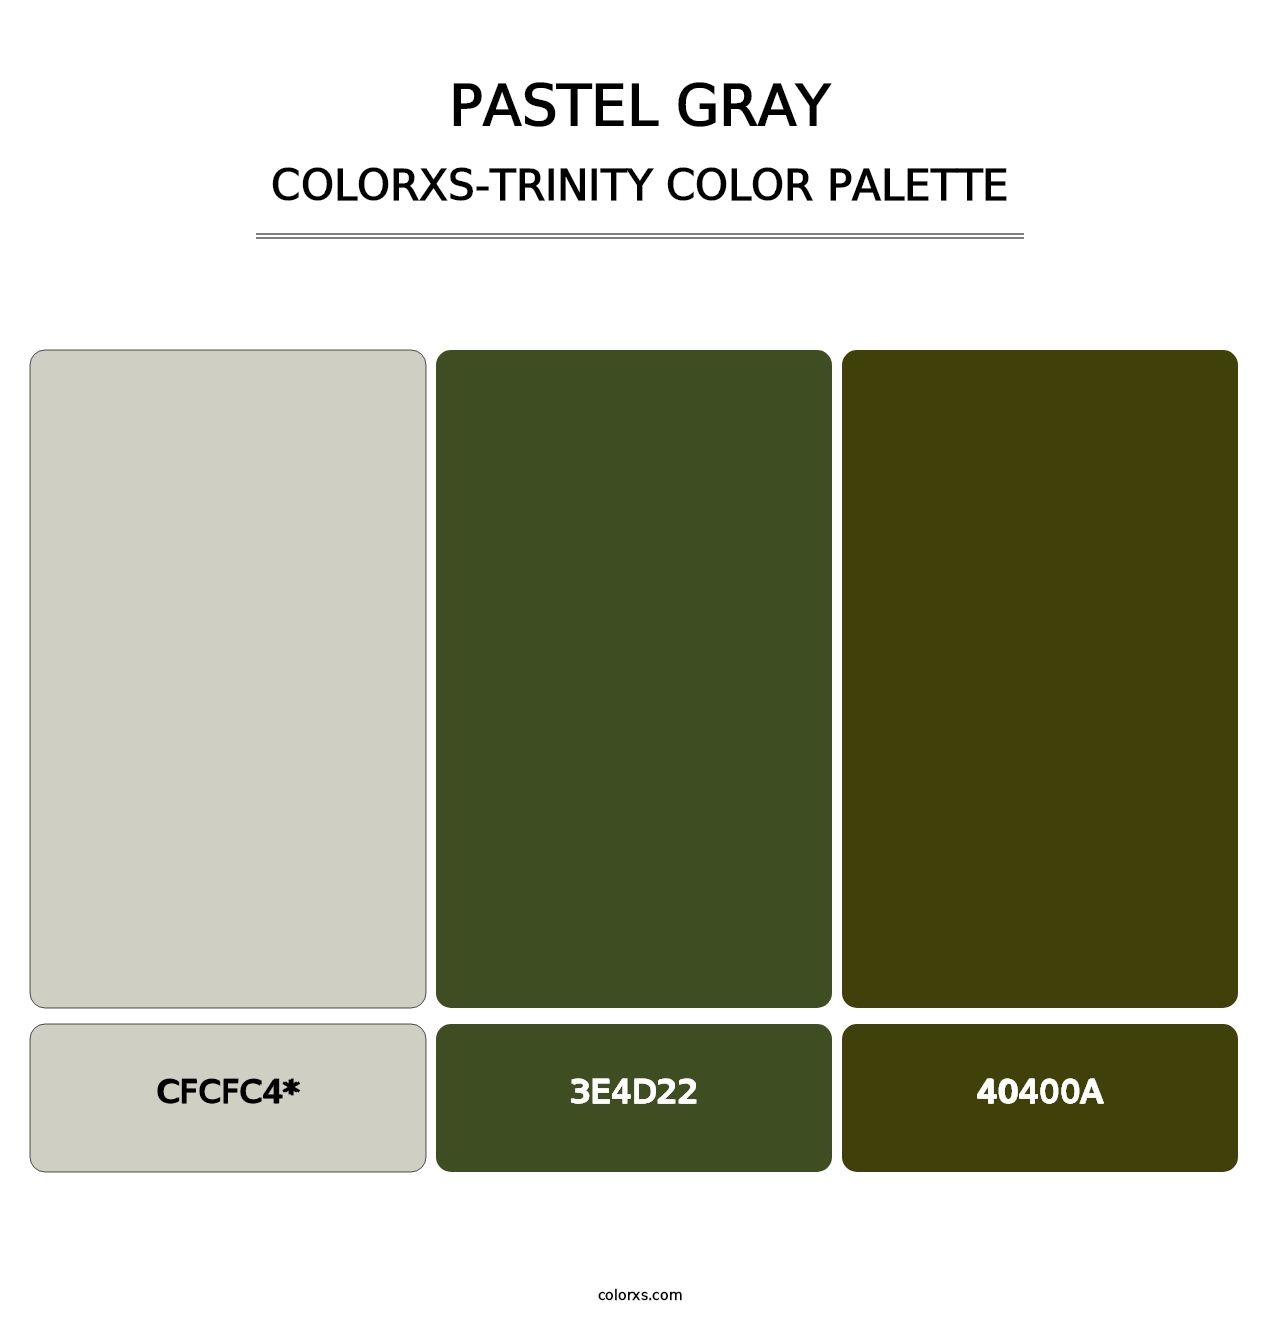 Pastel Gray - Colorxs Trinity Palette